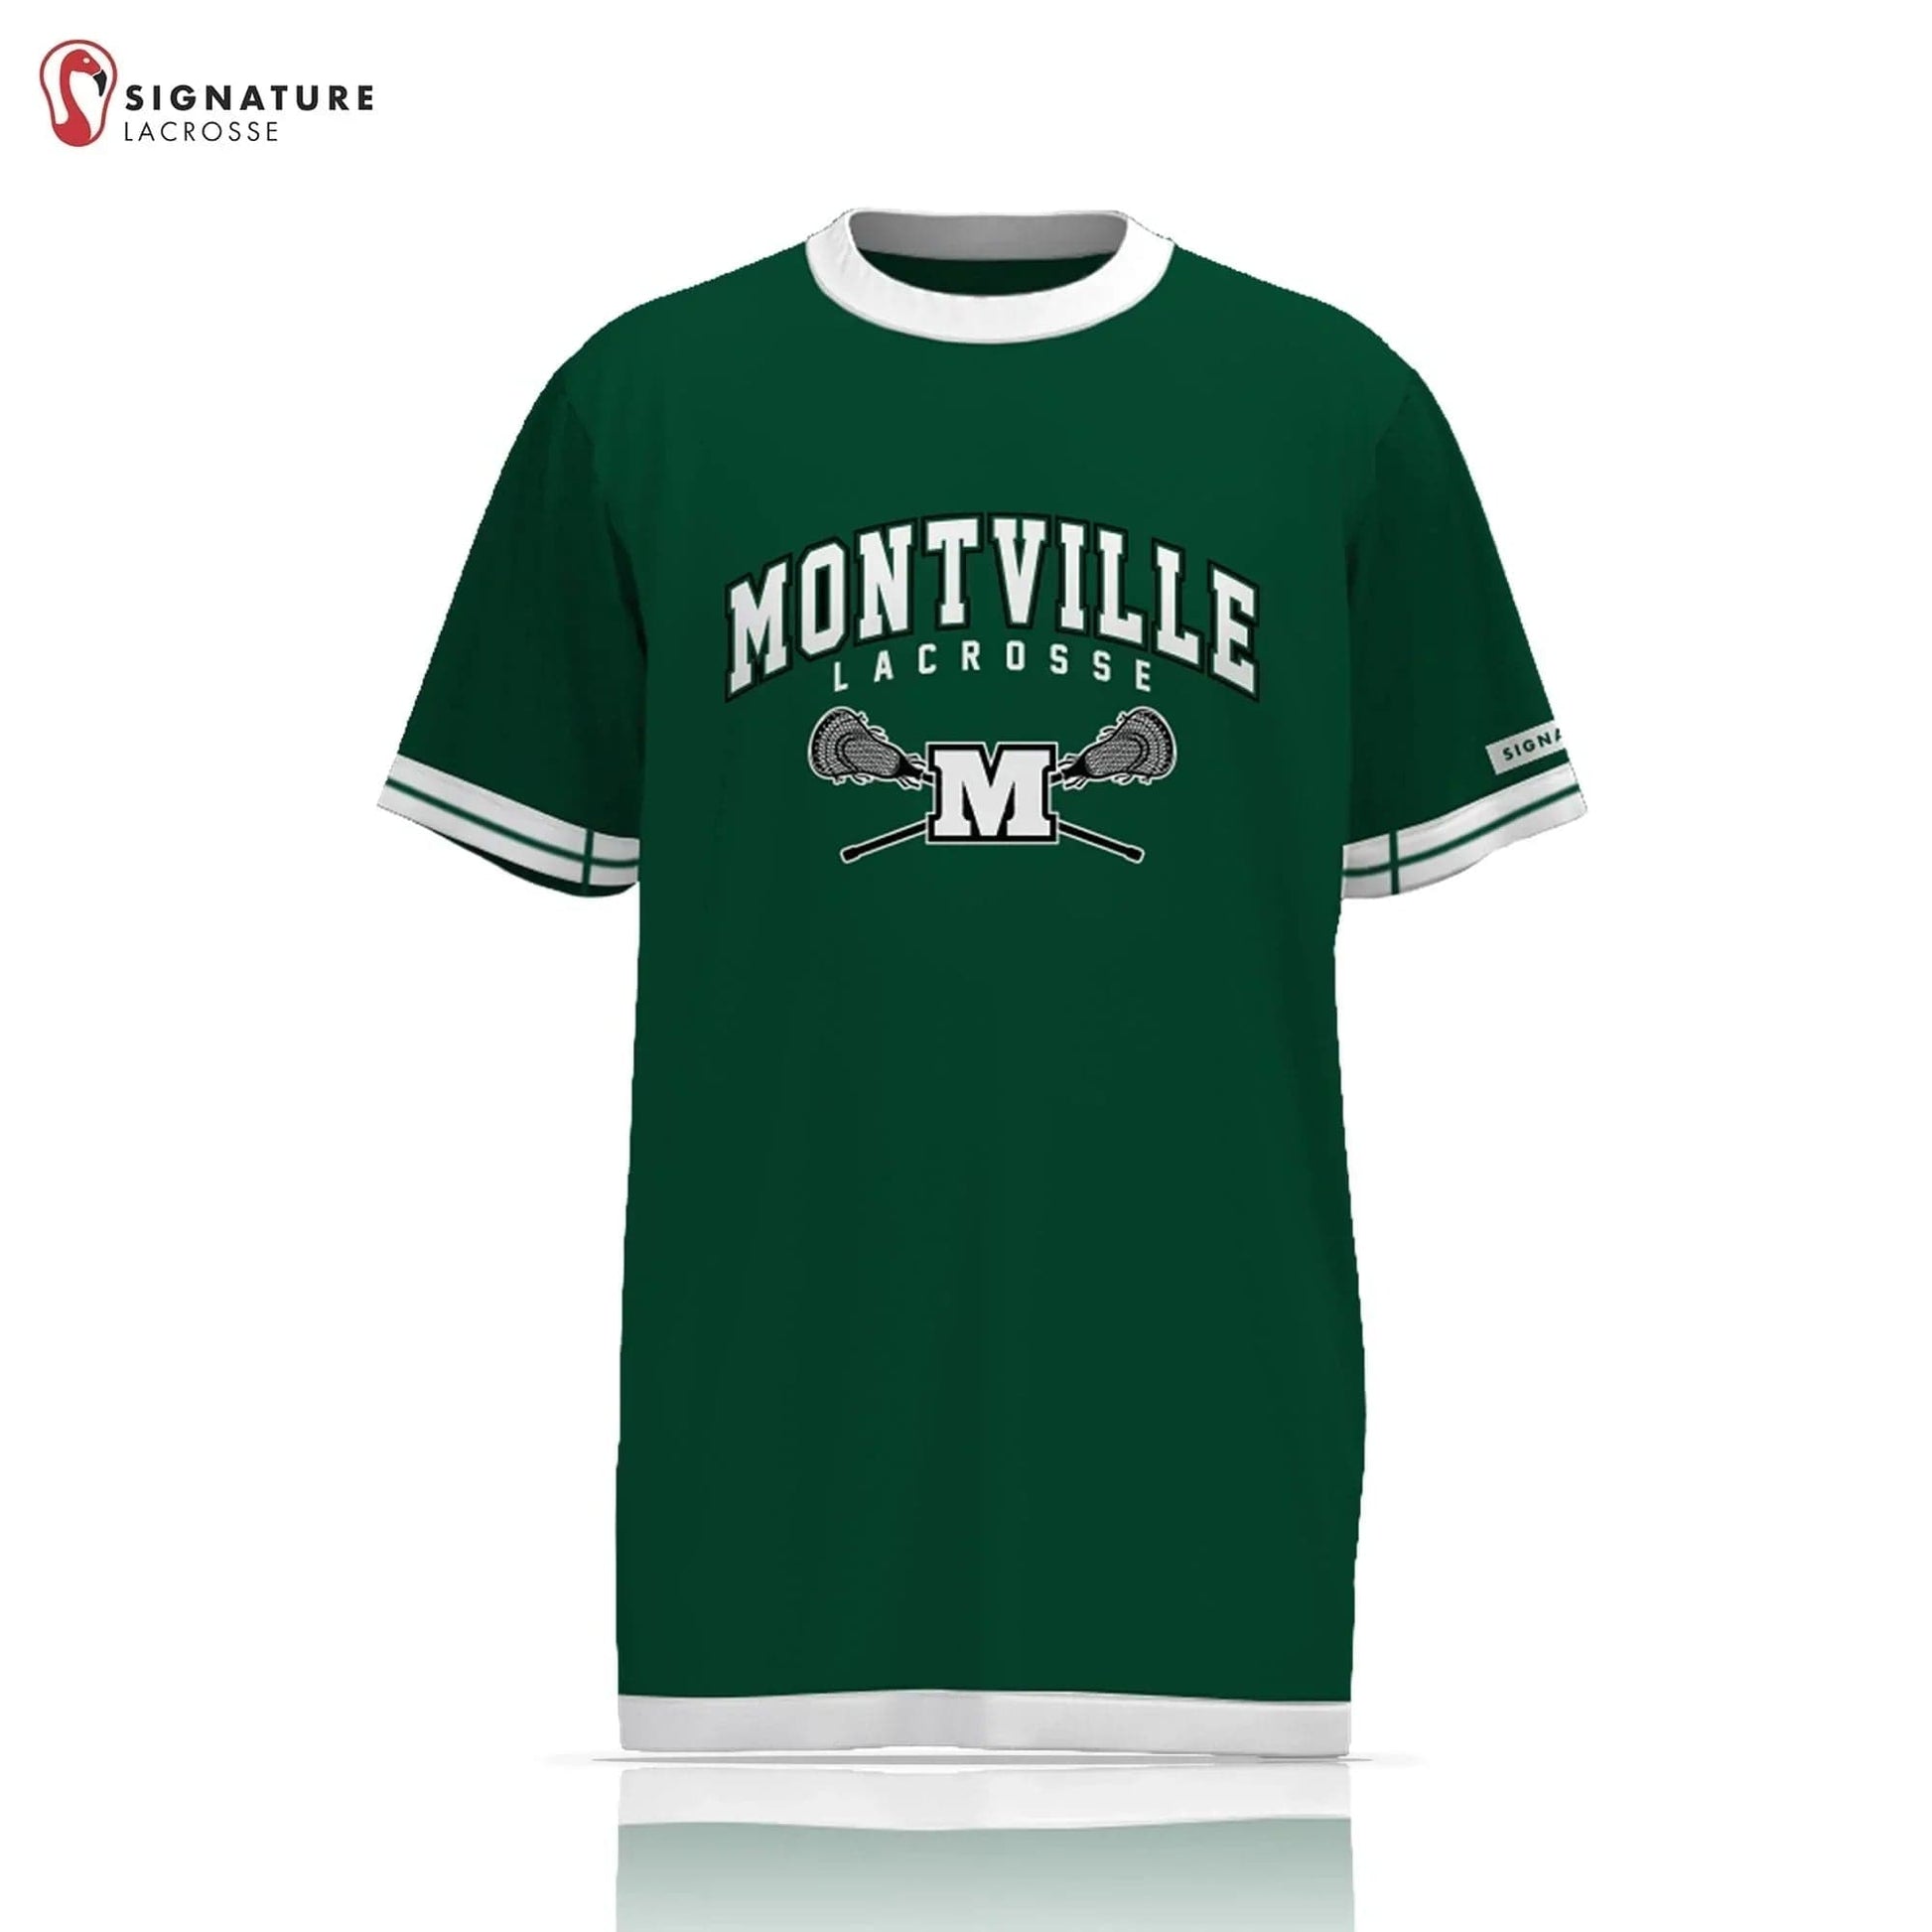 Montville Lacrosse Men's Game Short Sleeve Shooter Shirt: 7th Grade Signature Lacrosse